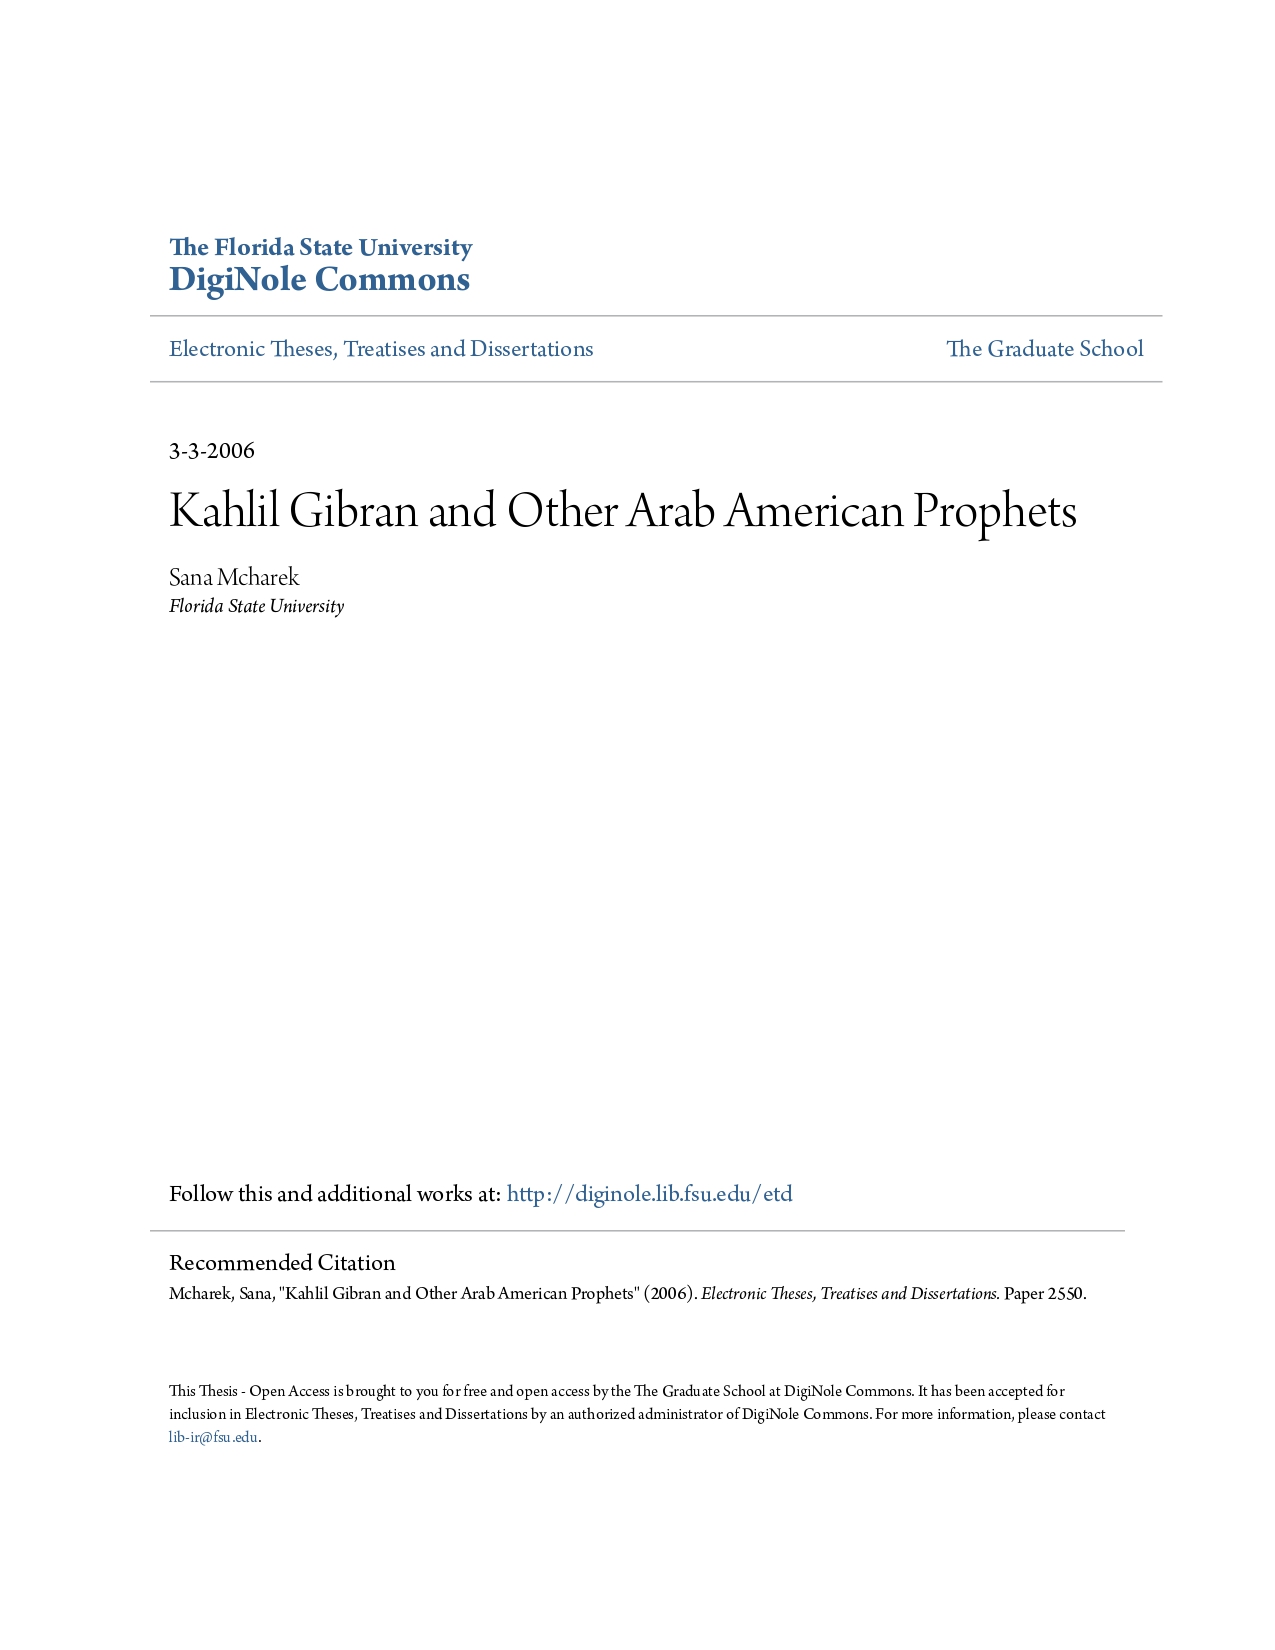 Sana Mcharek, "Kahlil Gibran and Other Arab American Prophets", The Florida State University, 2006.